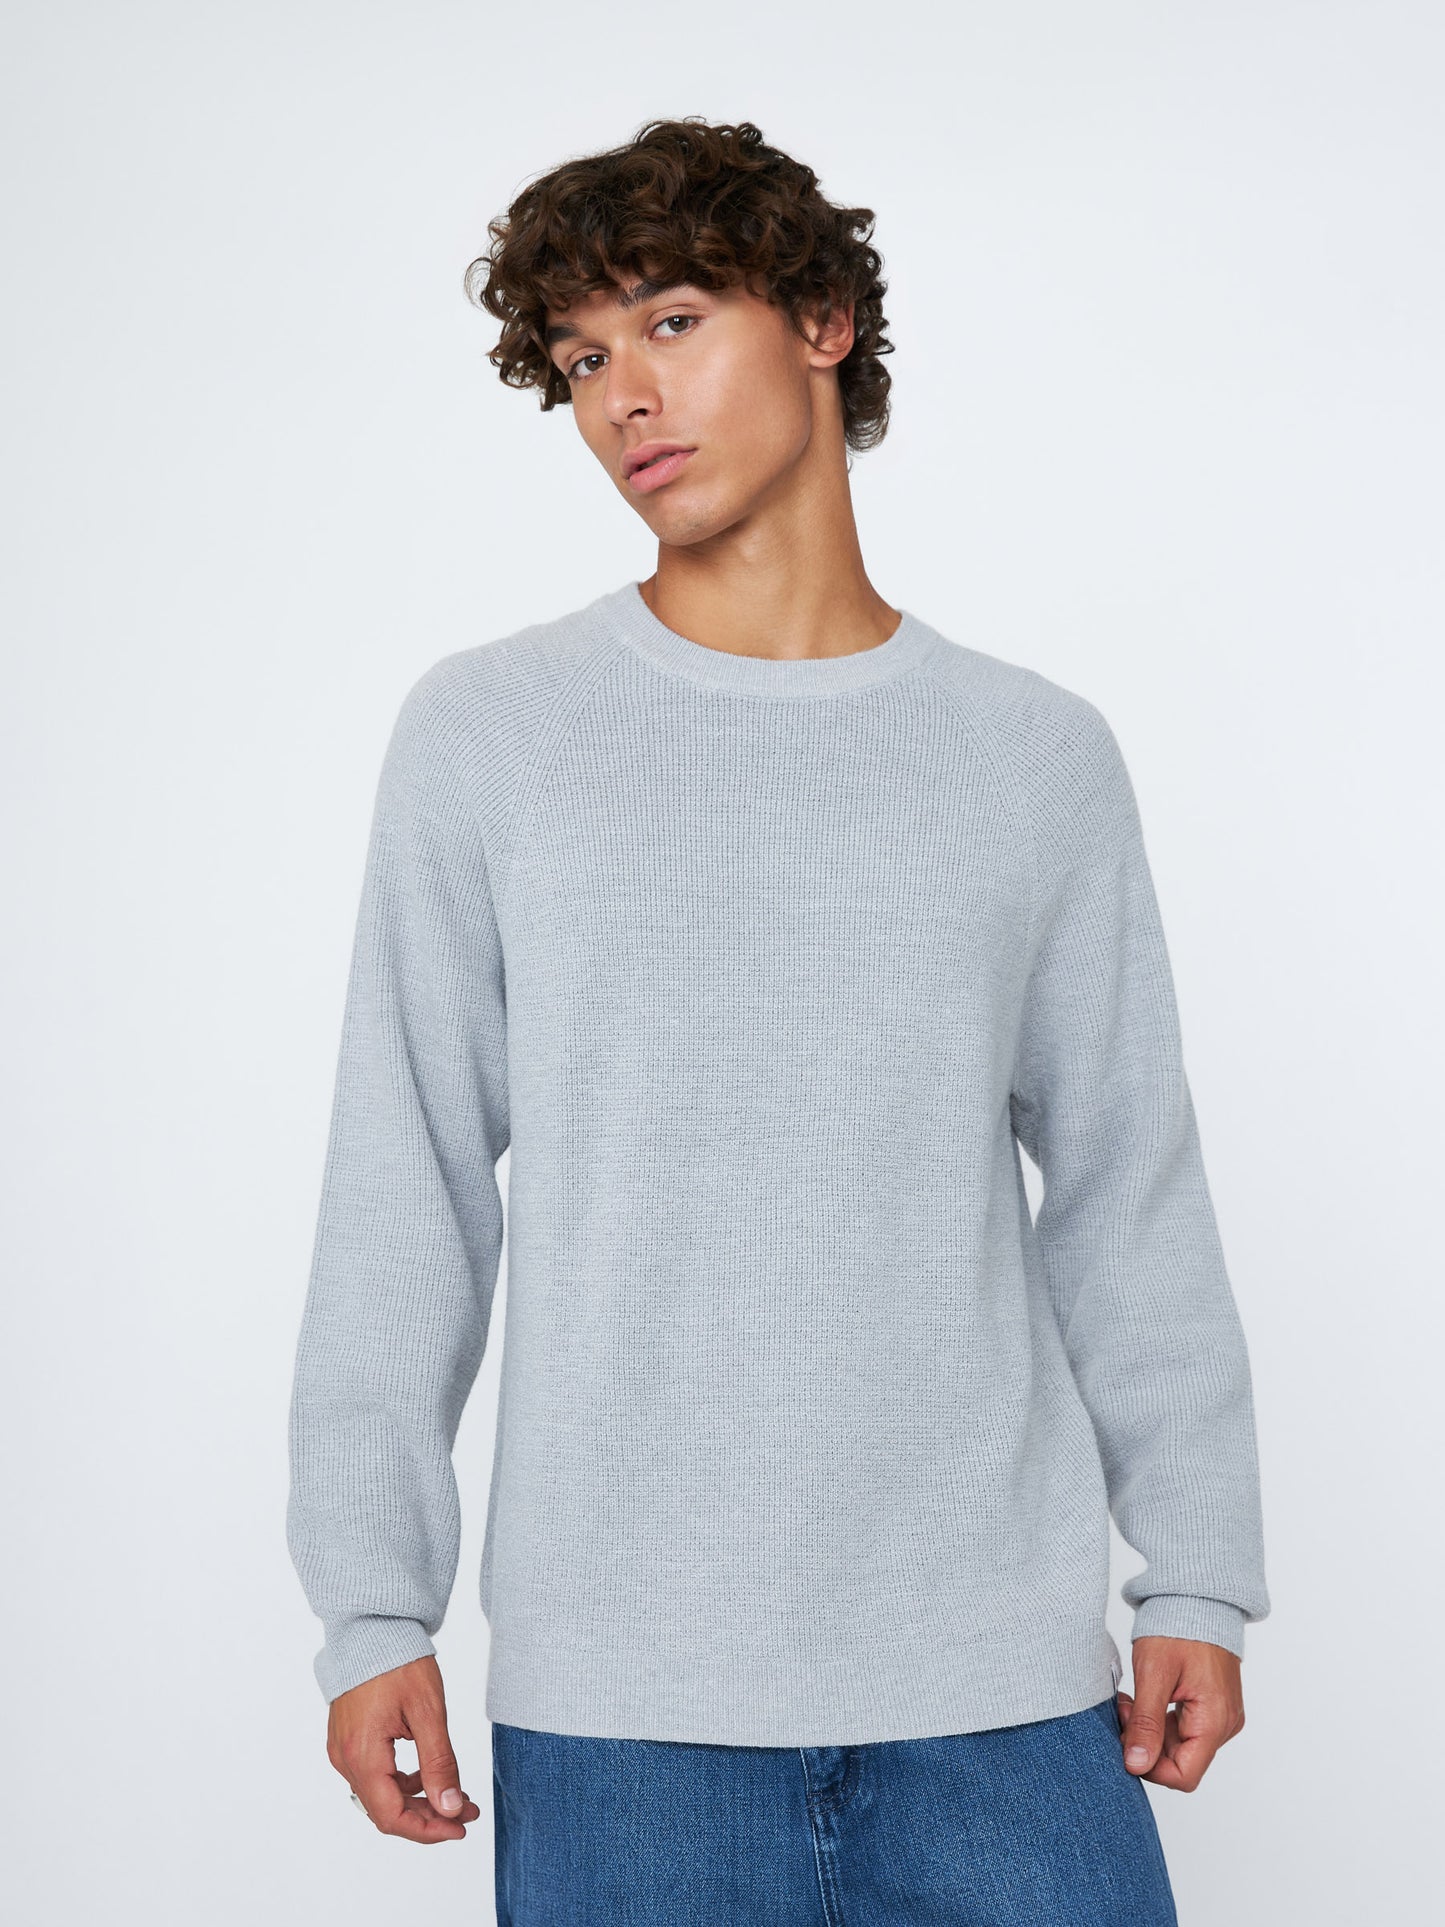 m sweaters - ATRIUM - Honeycomb Knit Crewneck Pullover - PLENTY